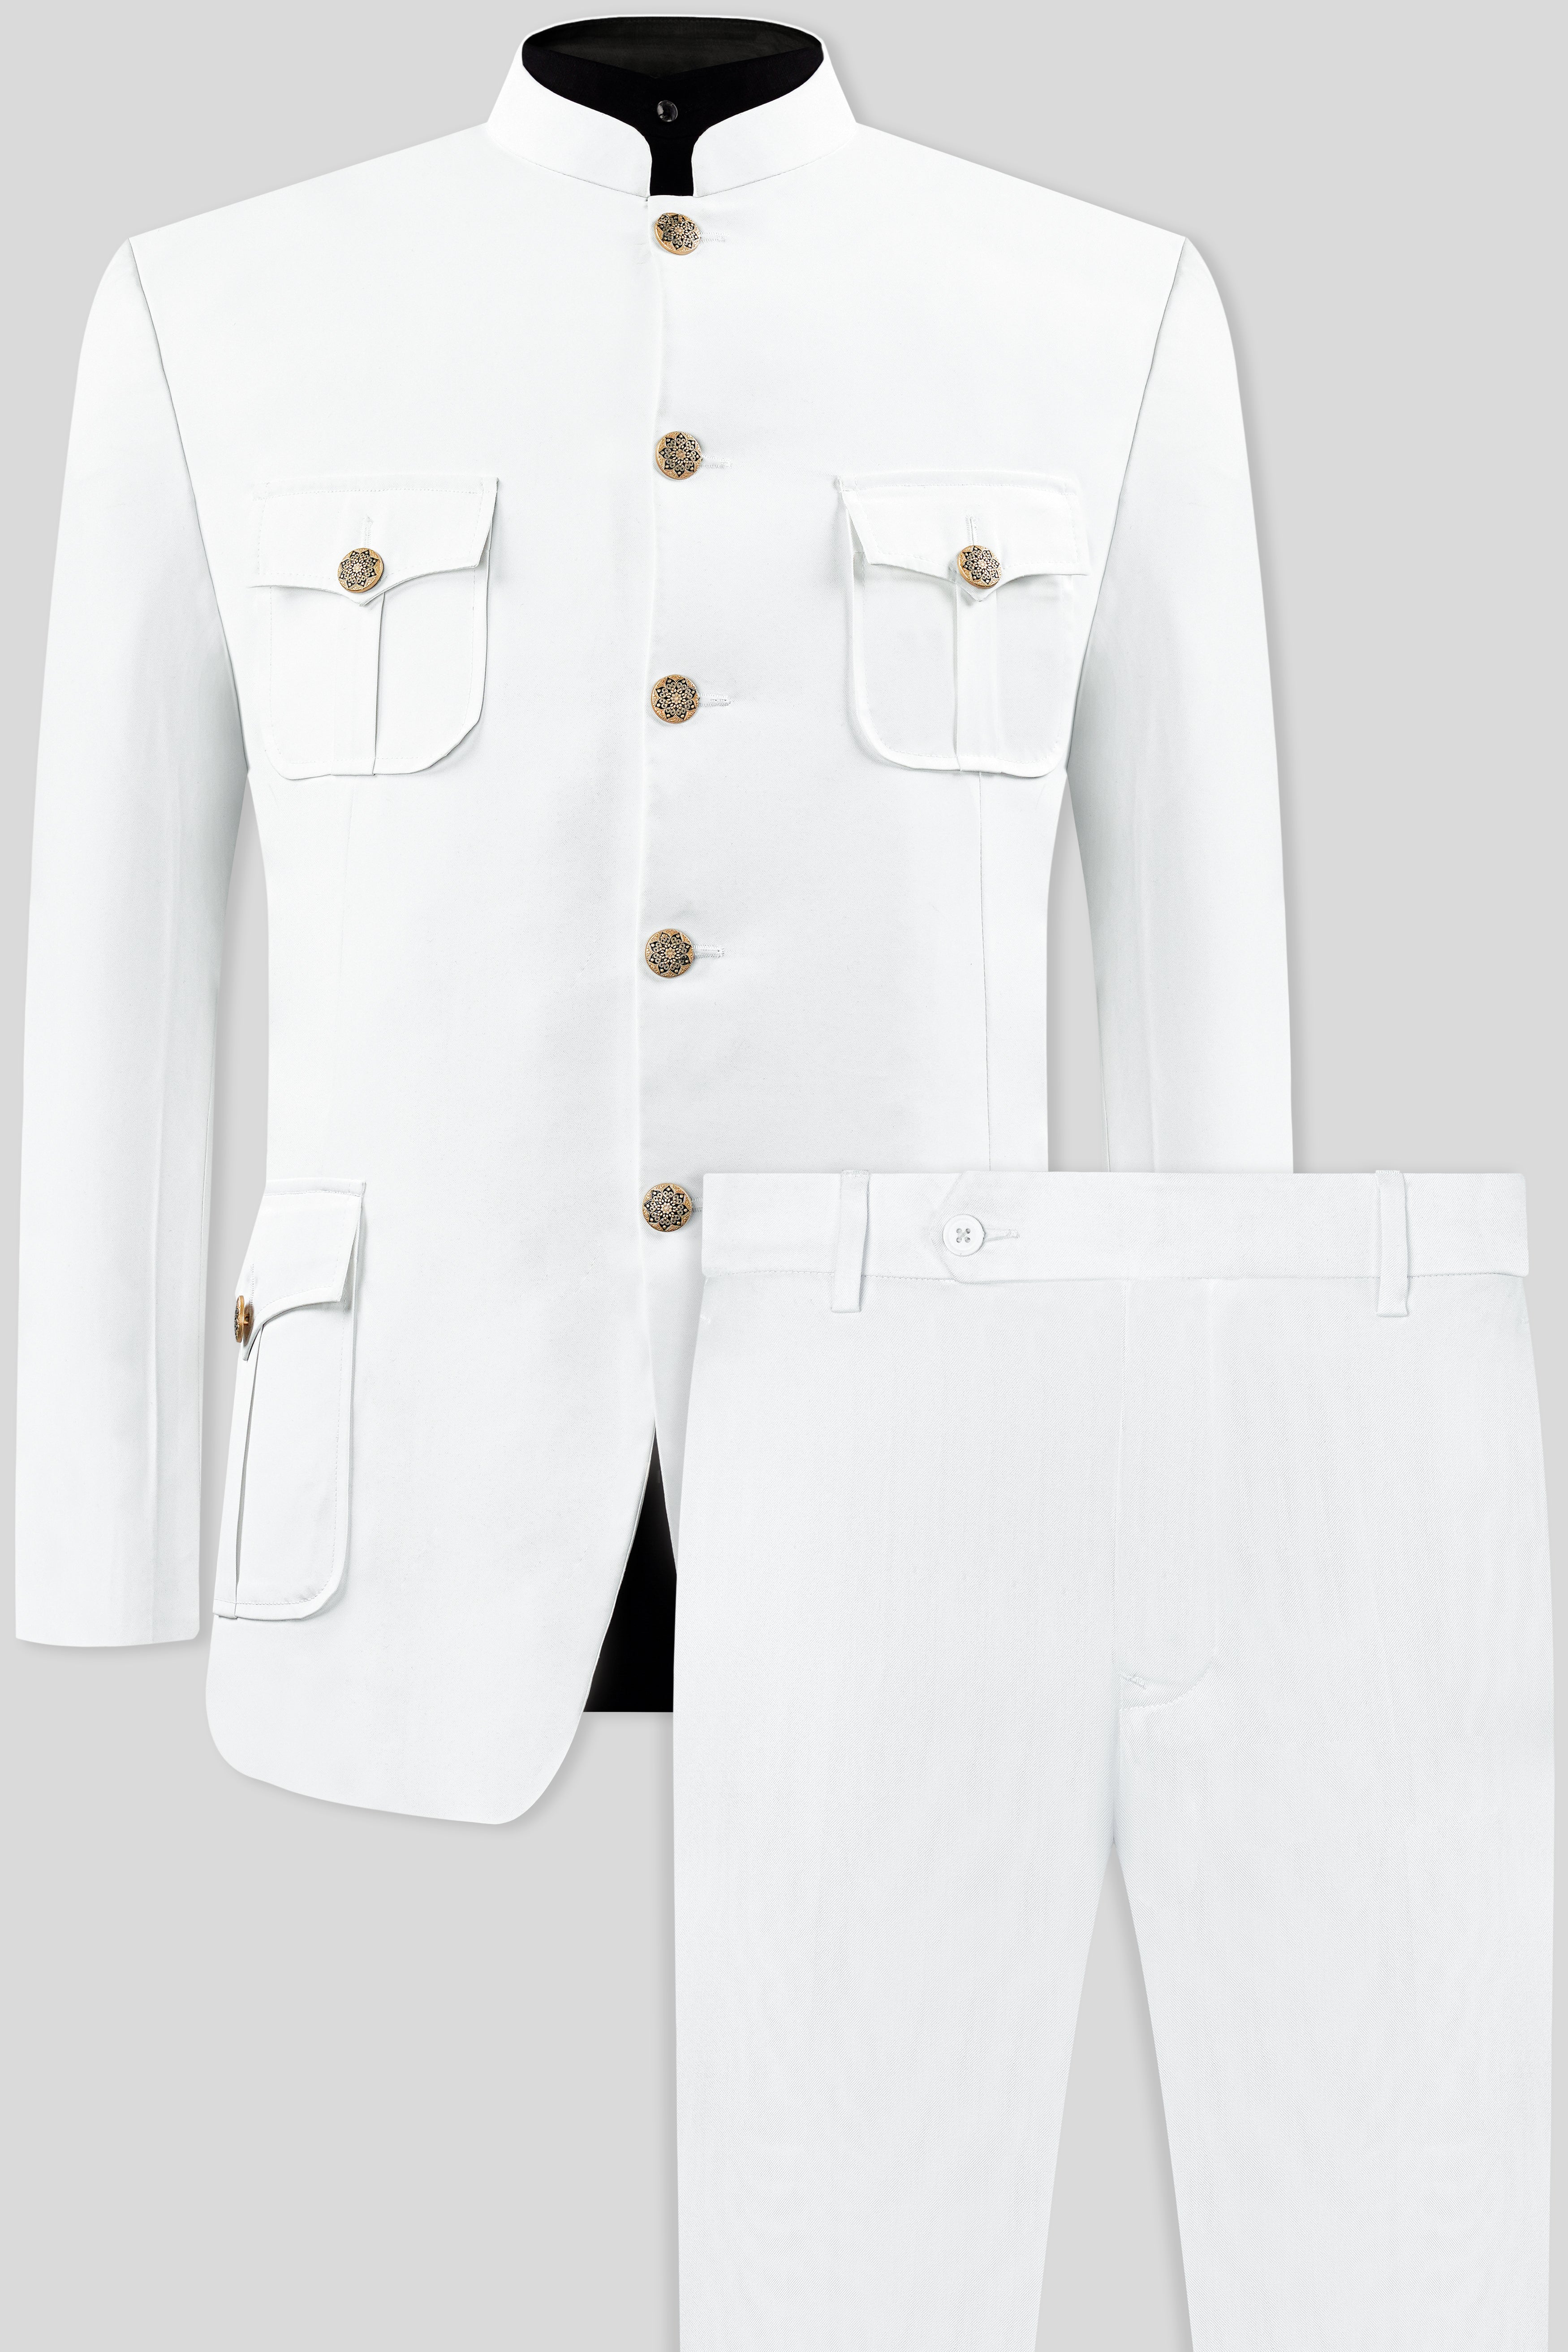 Bright White Wool Rich Bandhgala Designer Suit ST2993-BG-D41-36, ST2993-BG-D41-38, ST2993-BG-D41-40, ST2993-BG-D41-42, ST2993-BG-D41-44, ST2993-BG-D41-46, ST2993-BG-D41-48, ST2993-BG-D41-50, ST2993-BG-D41-52, ST2993-BG-D41-54, ST2993-BG-D41-56, ST2993-BG-D41-58, ST2993-BG-D41-60